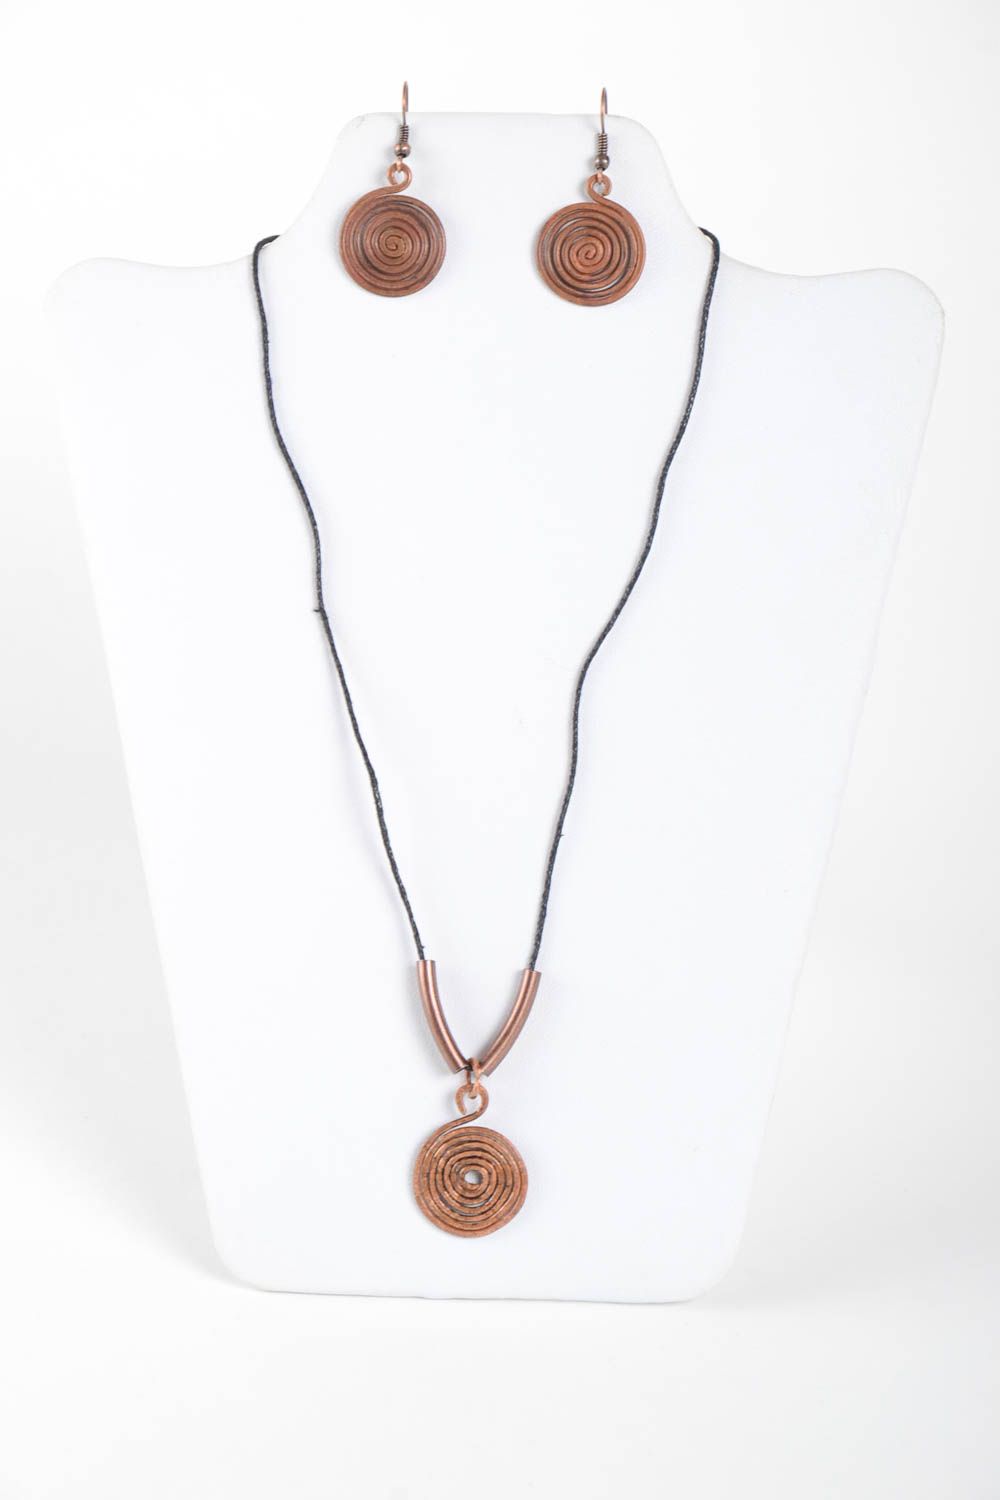 Handmade copper jewelry copper wire pendant copper earrings copper jewelry photo 2